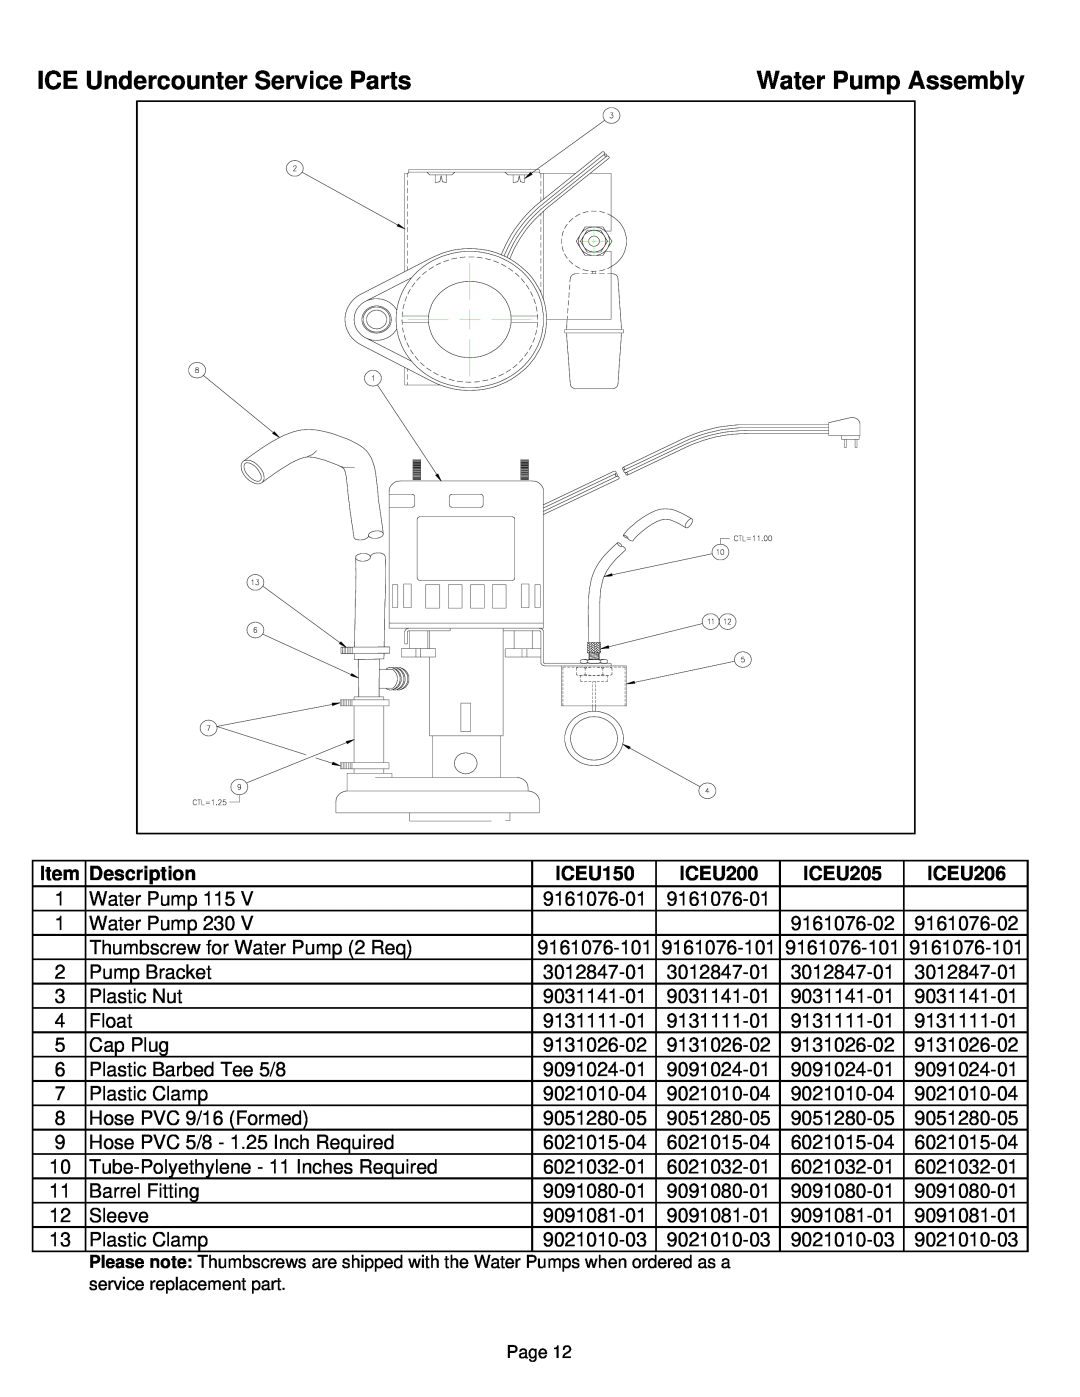 Ice-O-Matic ICEU206, ICEU205, iceu200 manual Water Pump Assembly, ICE Undercounter Service Parts 